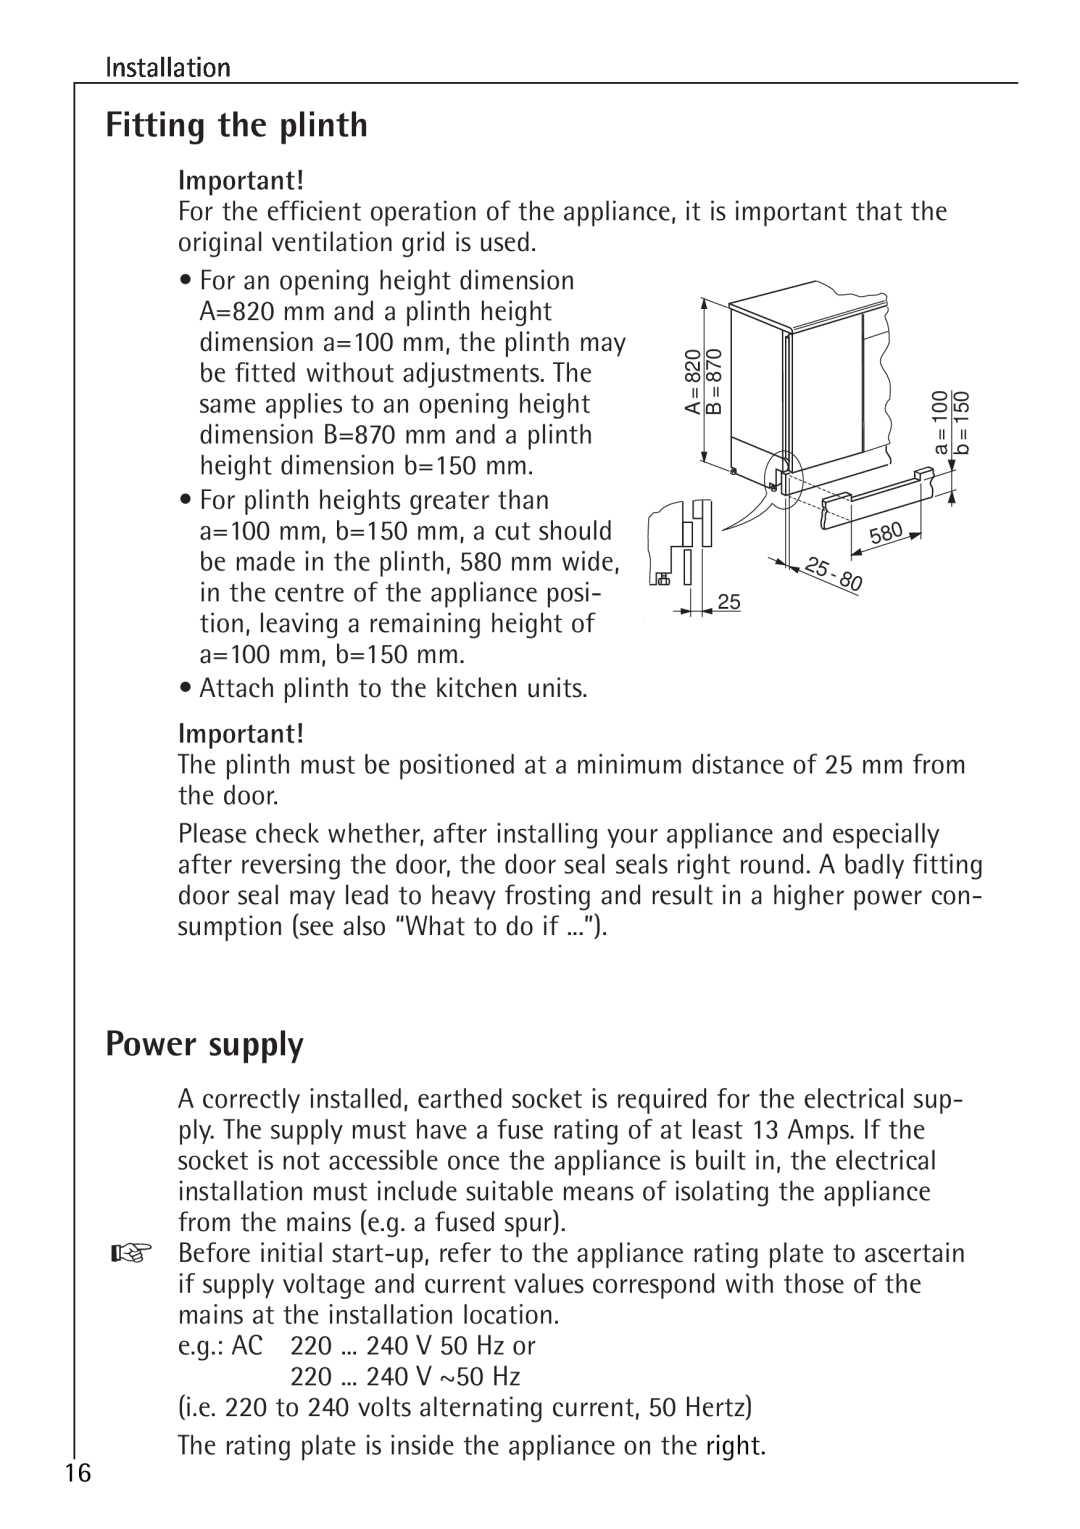 Electrolux U 86000-4 manual Fitting the plinth, Power supply, A = 820 B = 